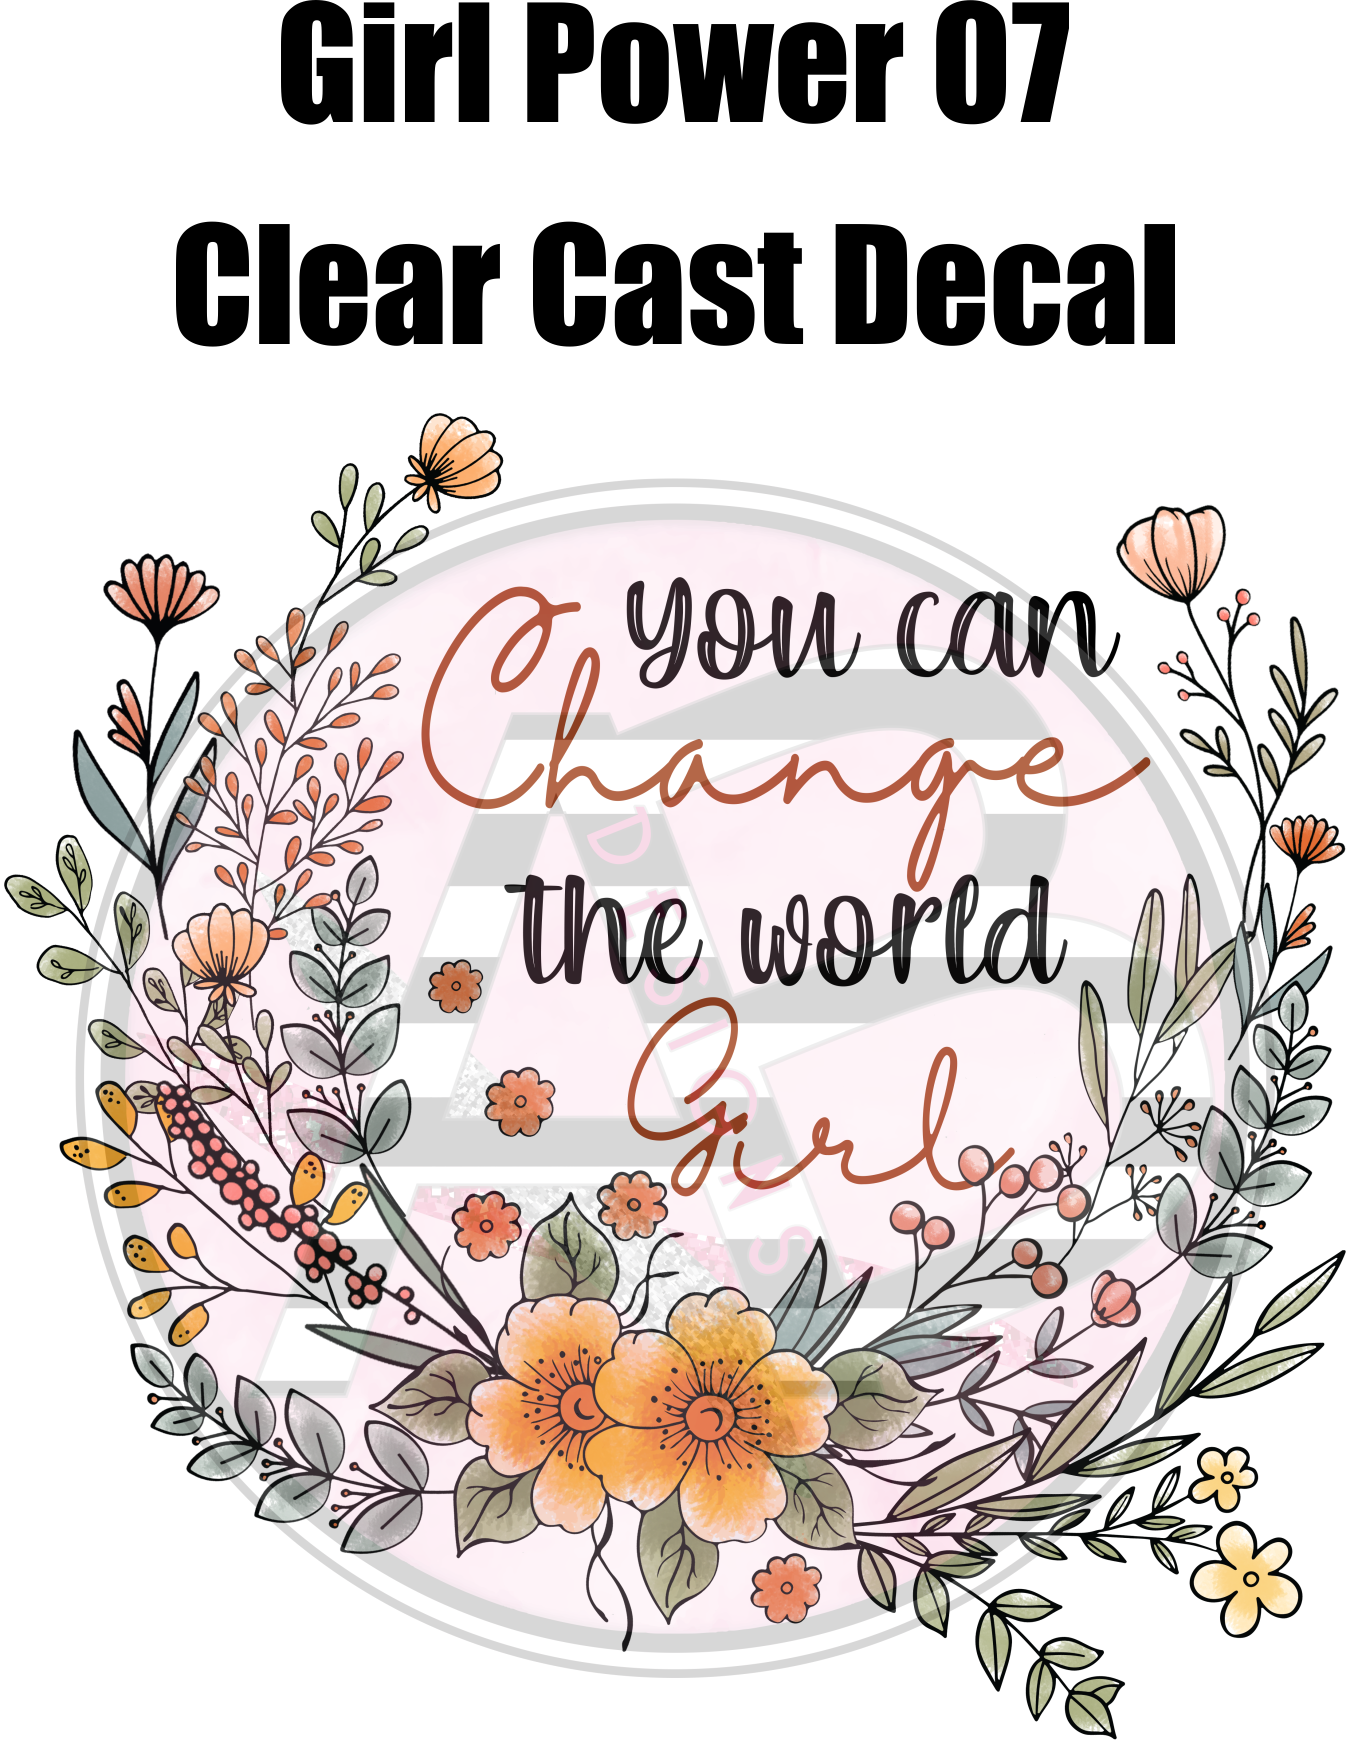 Girl Power 07 - Clear Cast Decal